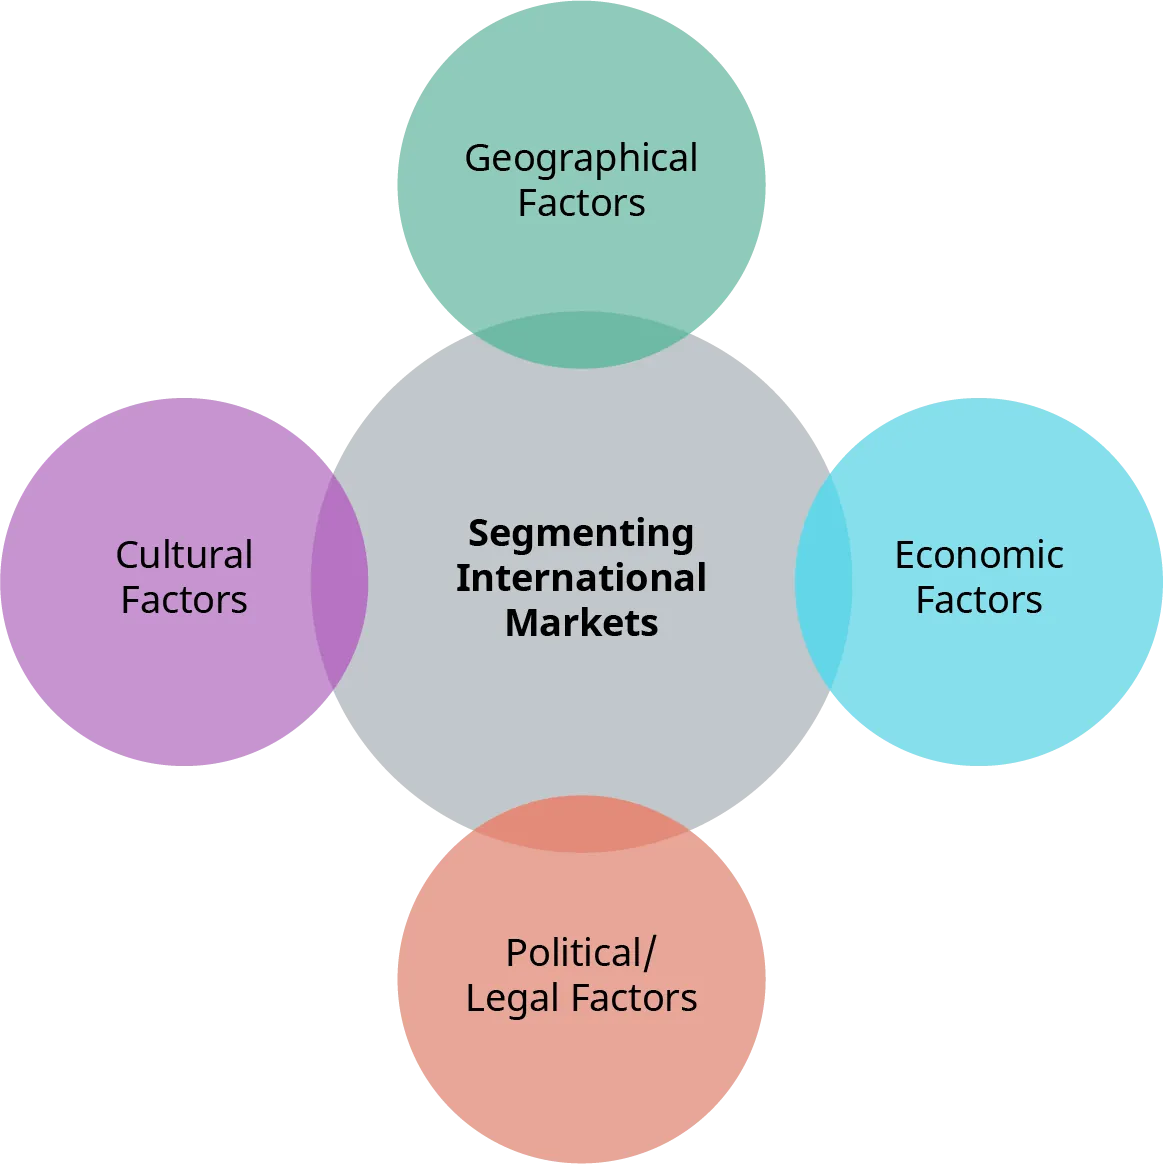 The four methods of segmenting international markets are geographical factors, economic factors, political / legal factors, and cultural factors.